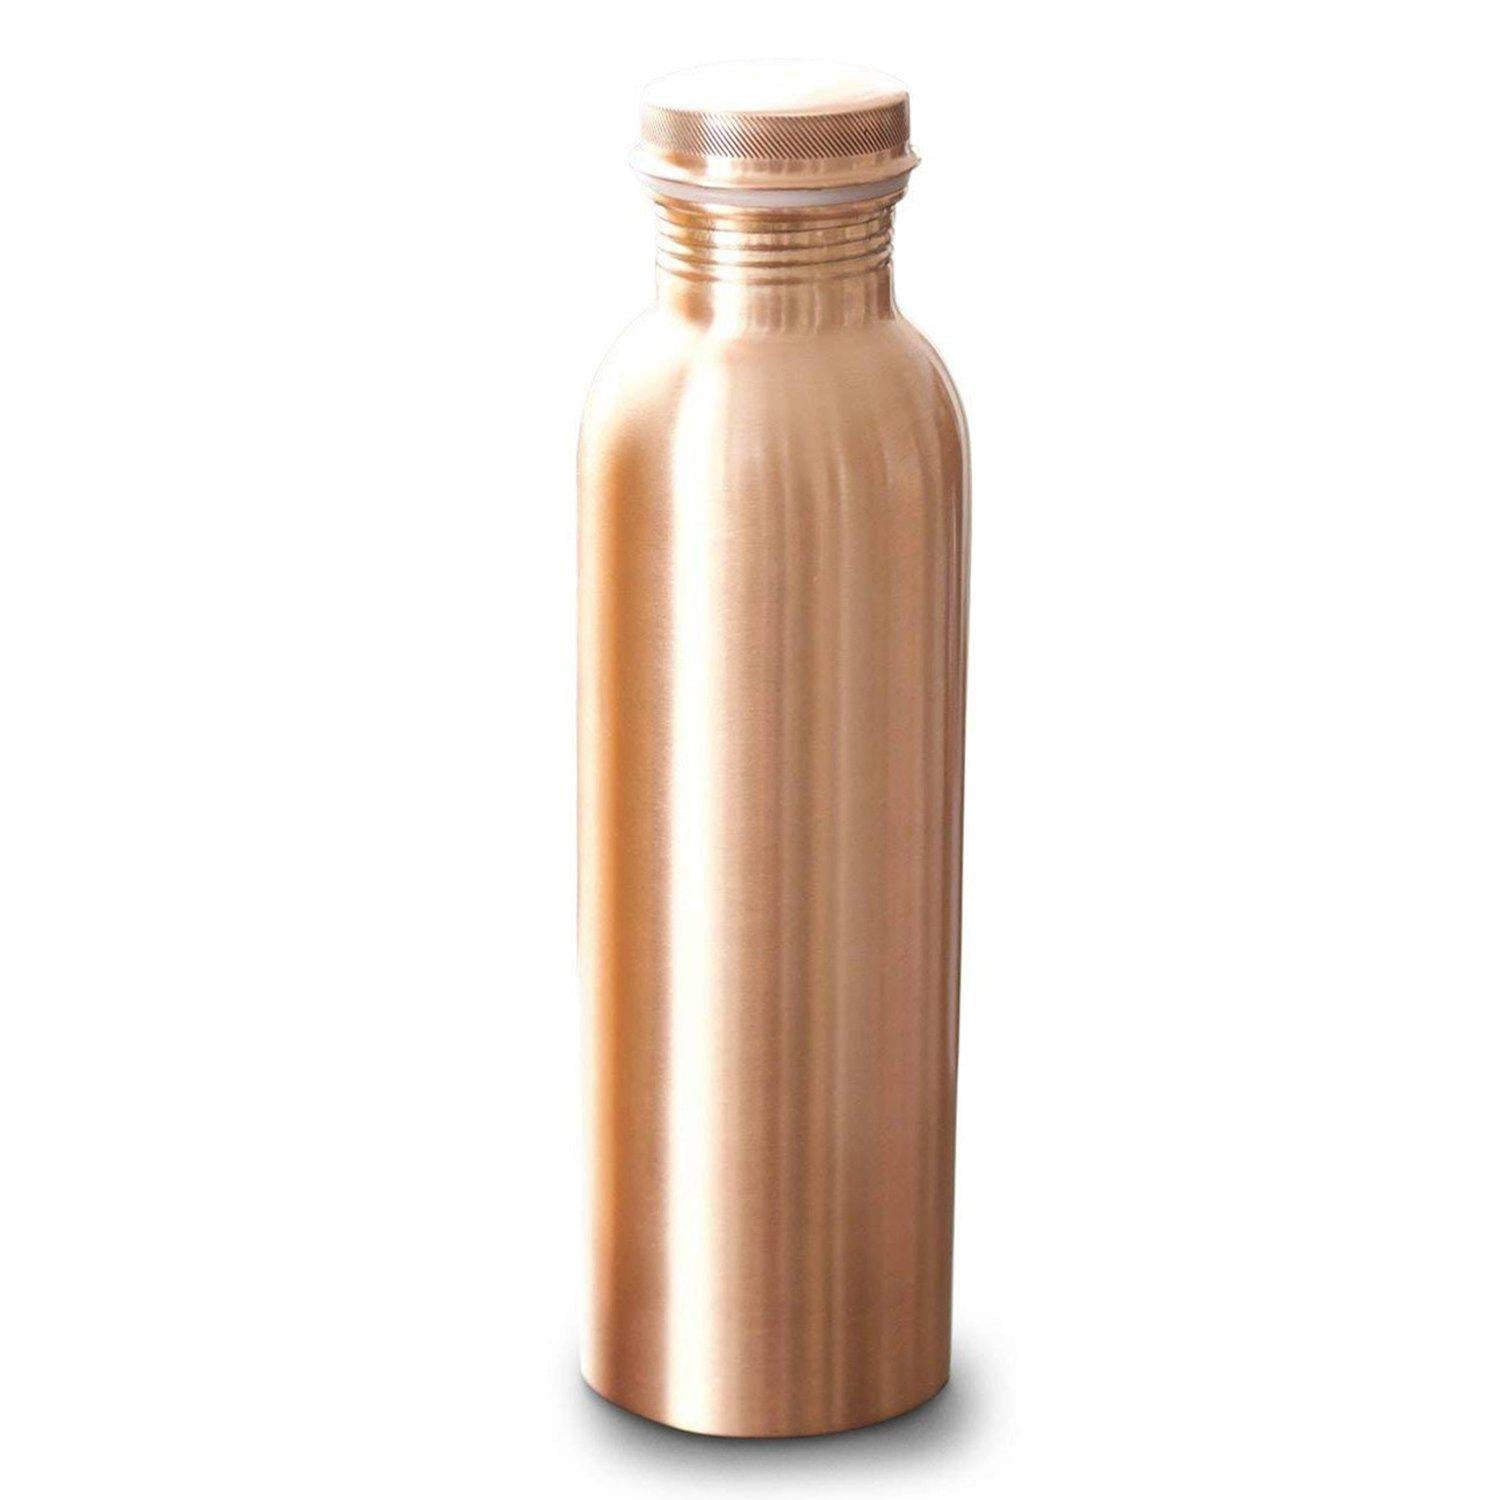 Prakti Copper Wellness Water Bottle: 100% Pure Copper for Hydration